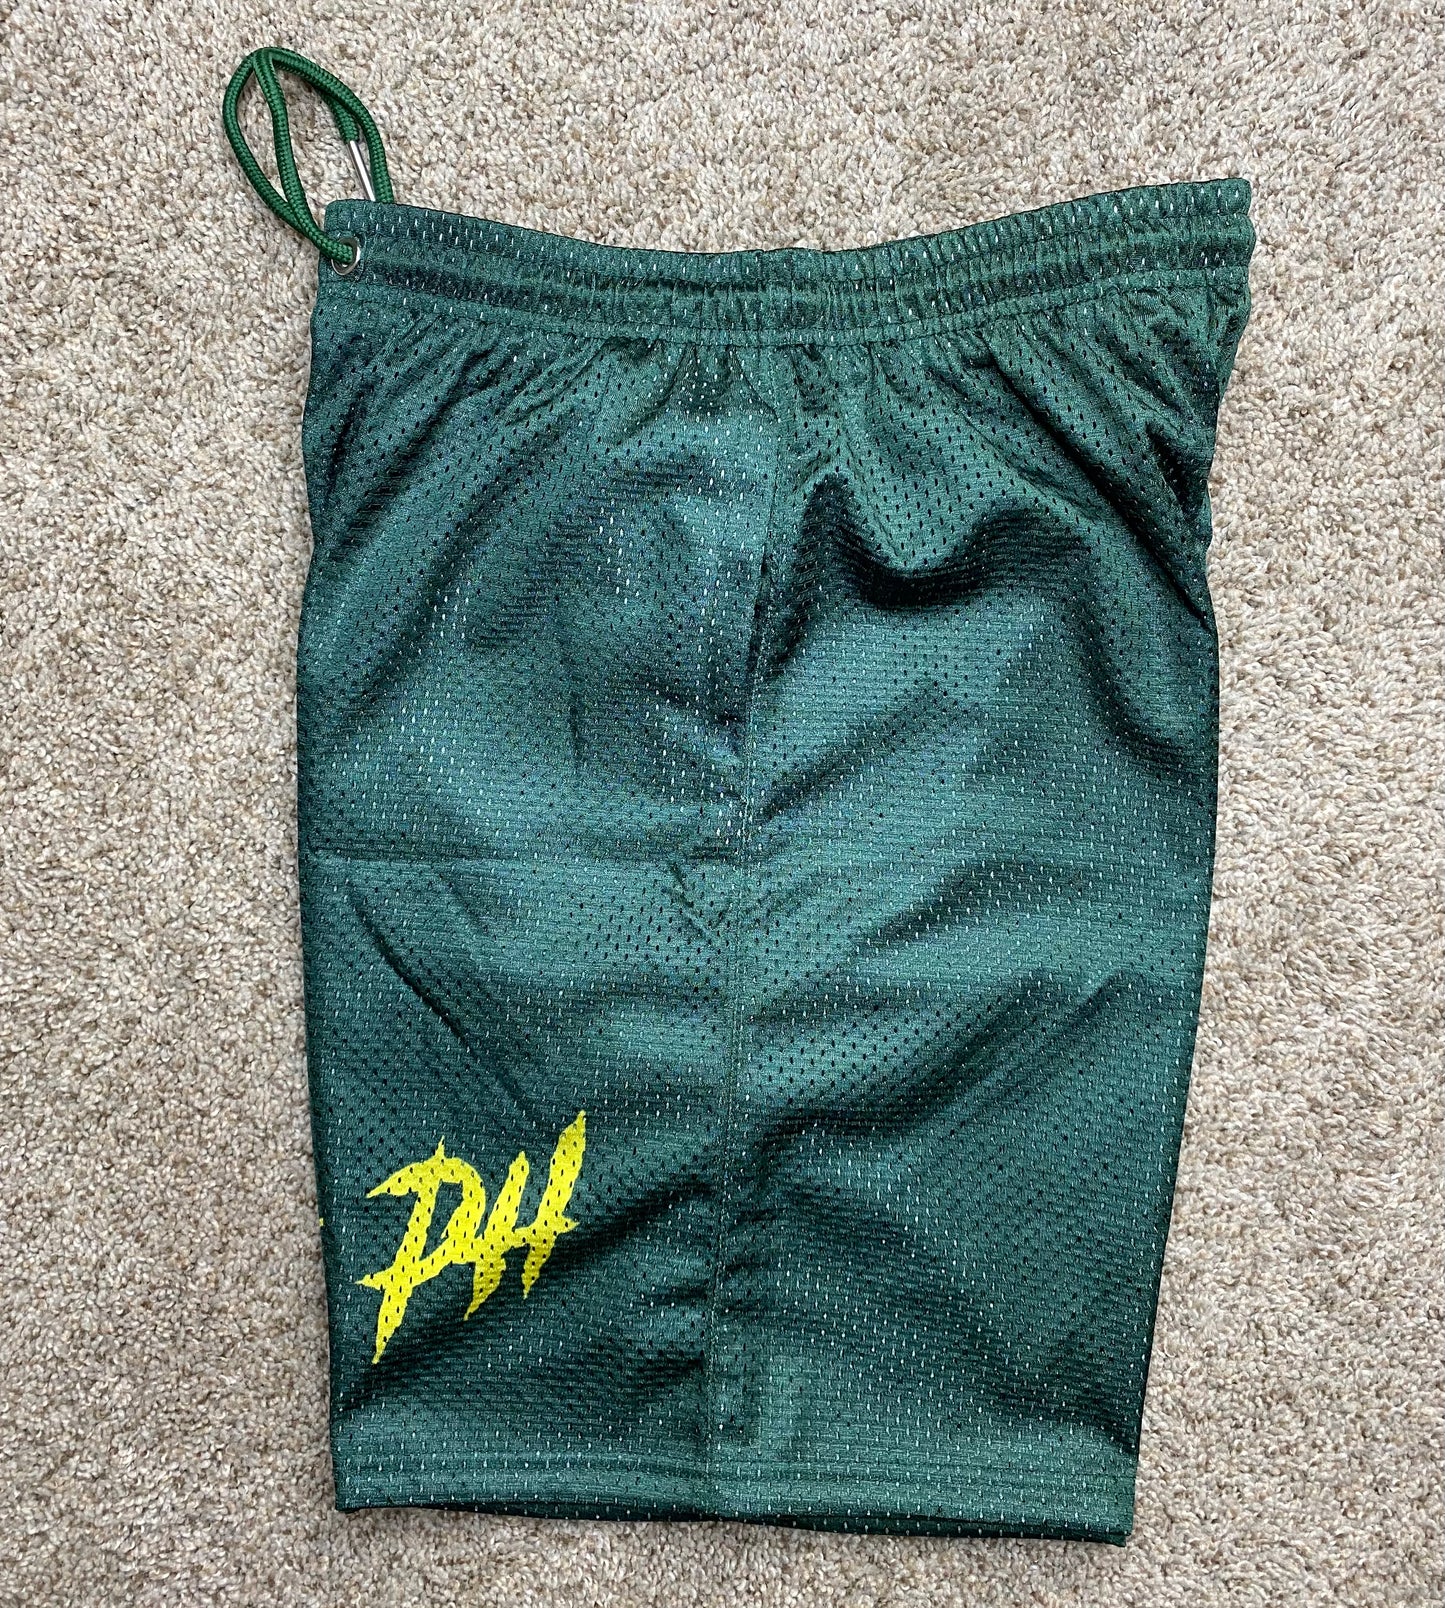 Packers Green Pure Hustle Mesh Shorts